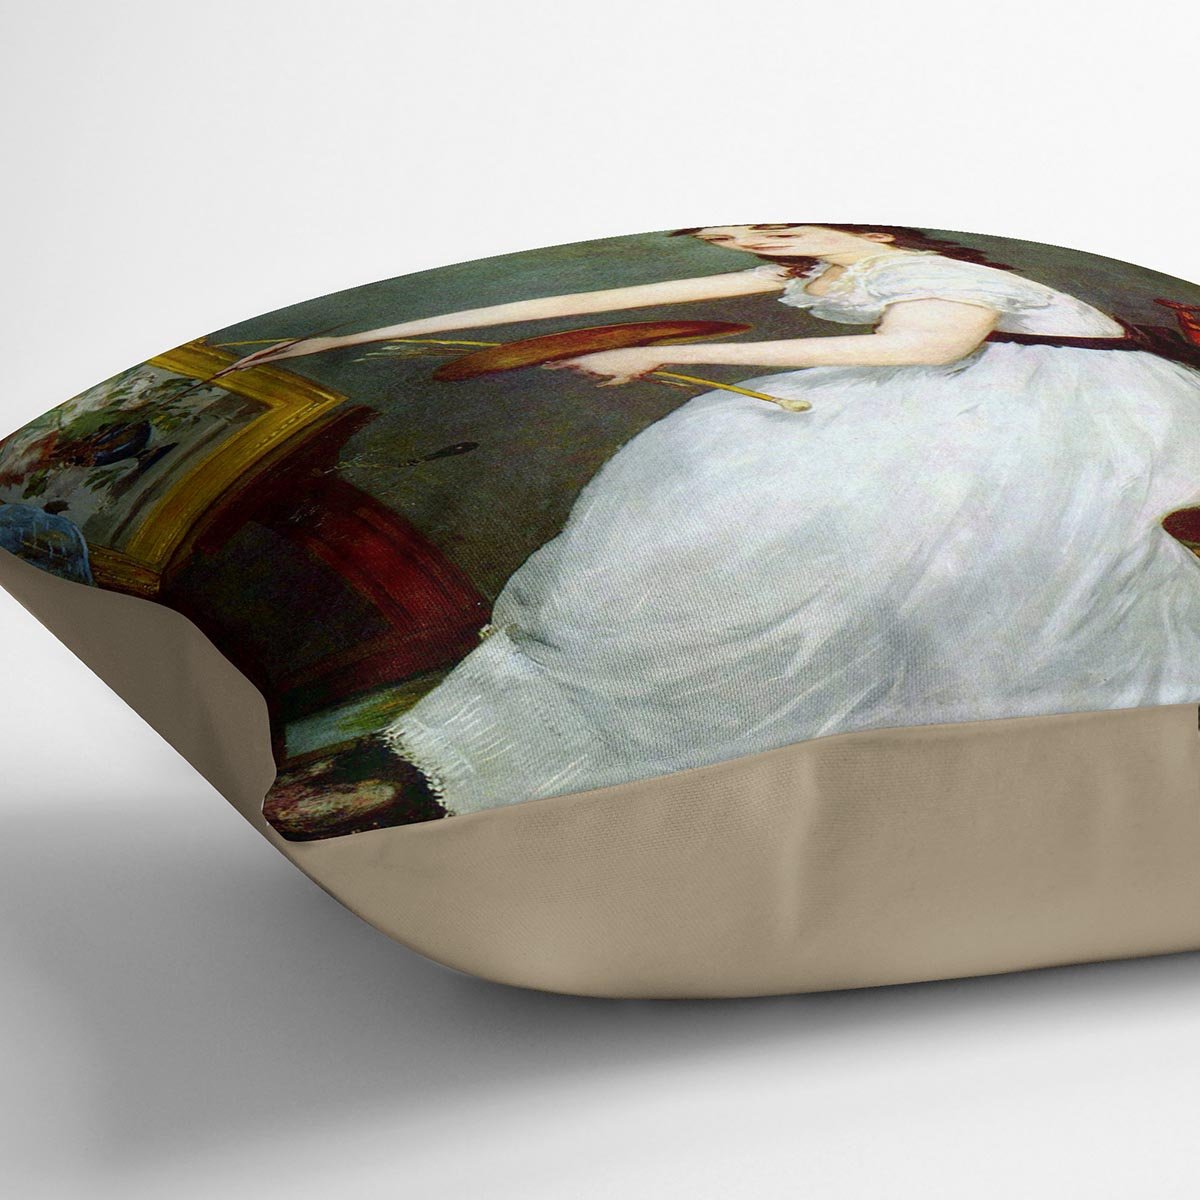 Portrait of Eva GonzalCs in Manets studio by Manet Throw Pillow